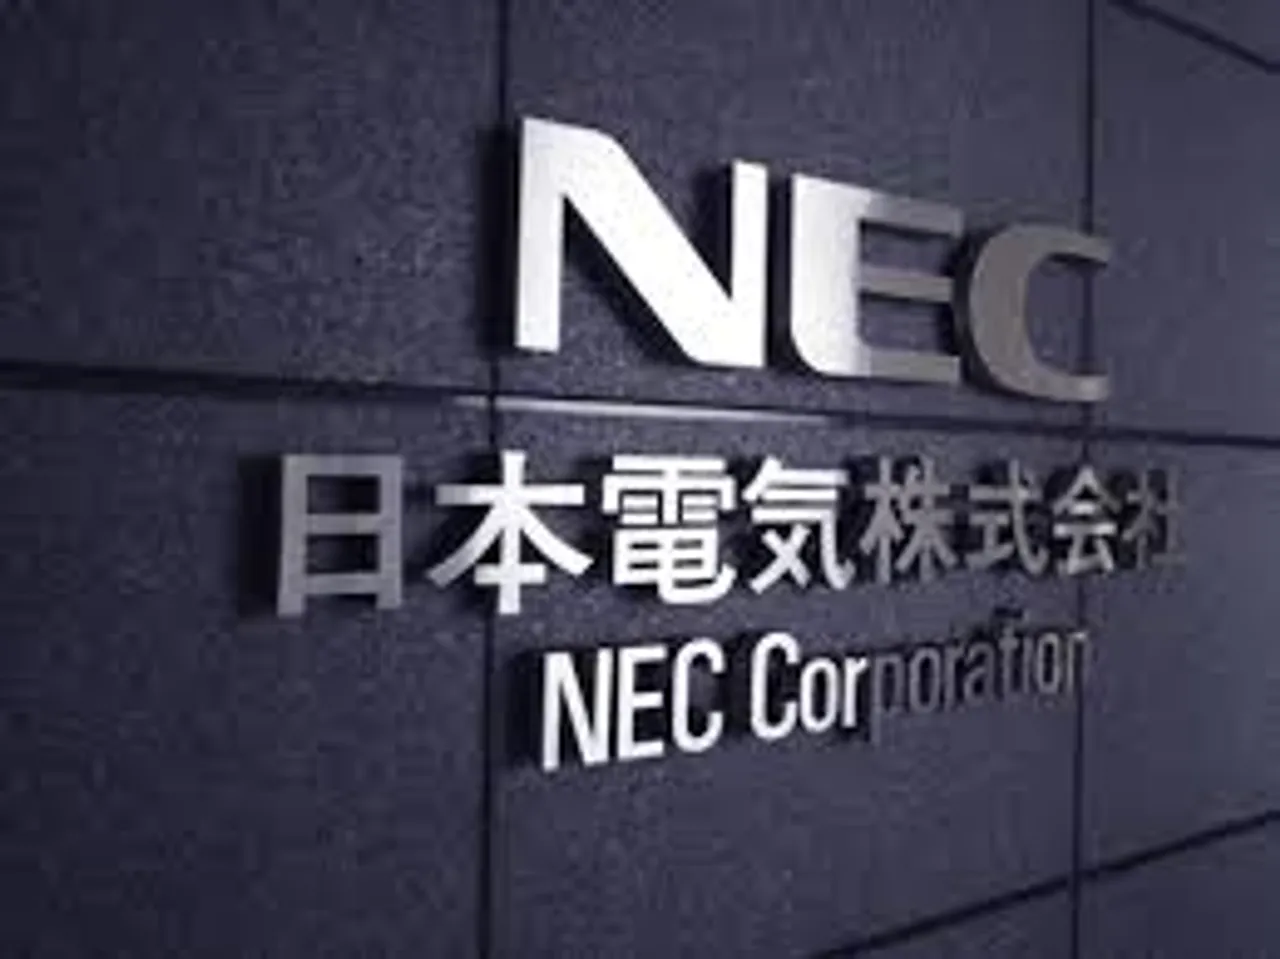 NEC Develops AI-based Customer Profile Estimation Technology